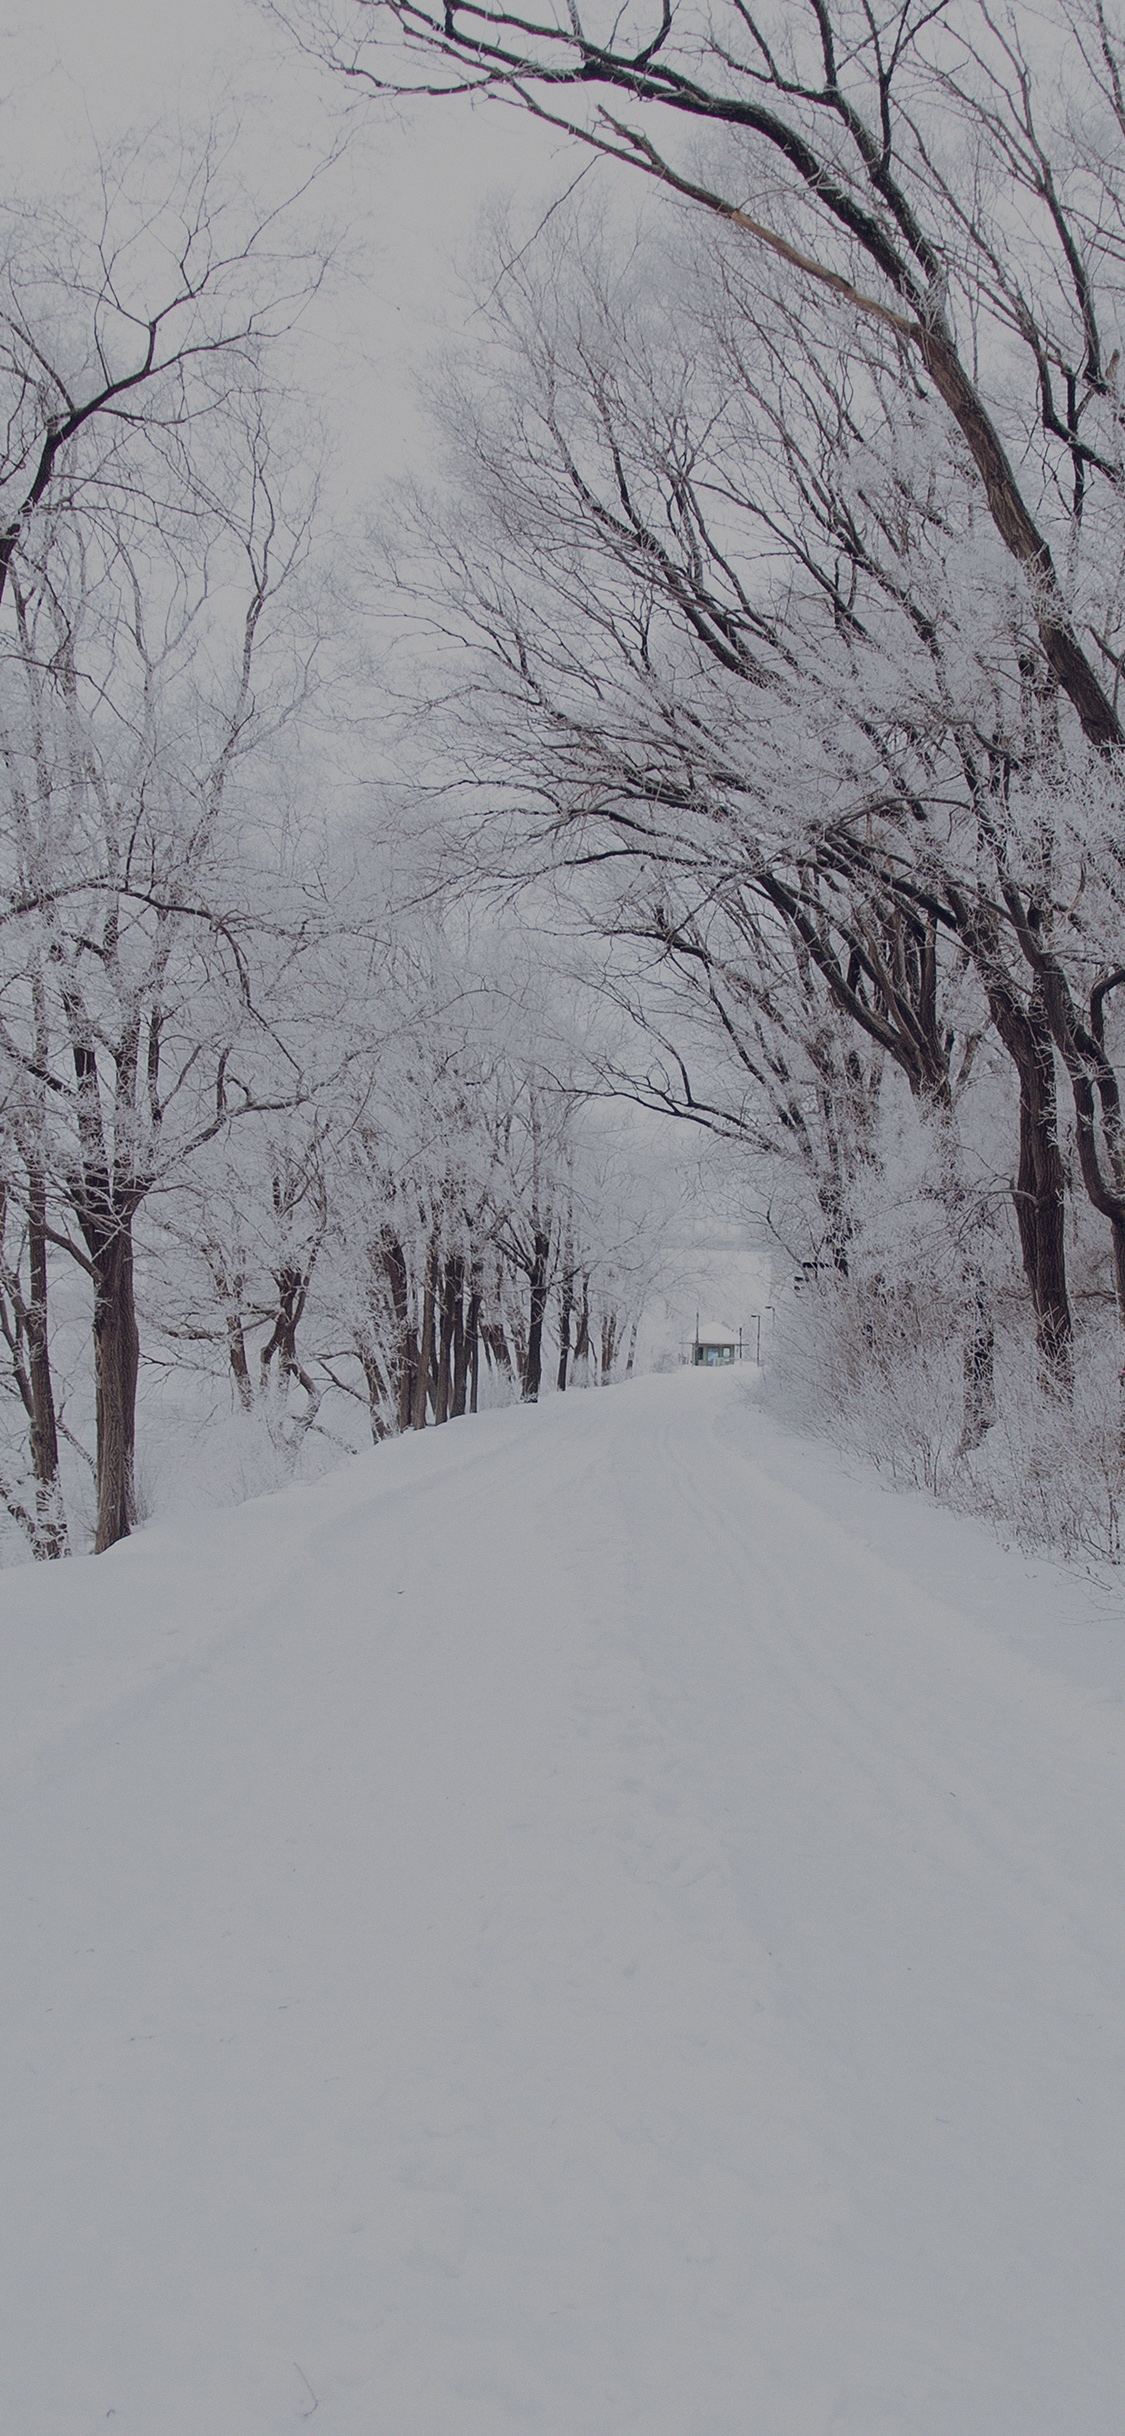 iPhone X wallpaper. winter road romantic nature mountain snow